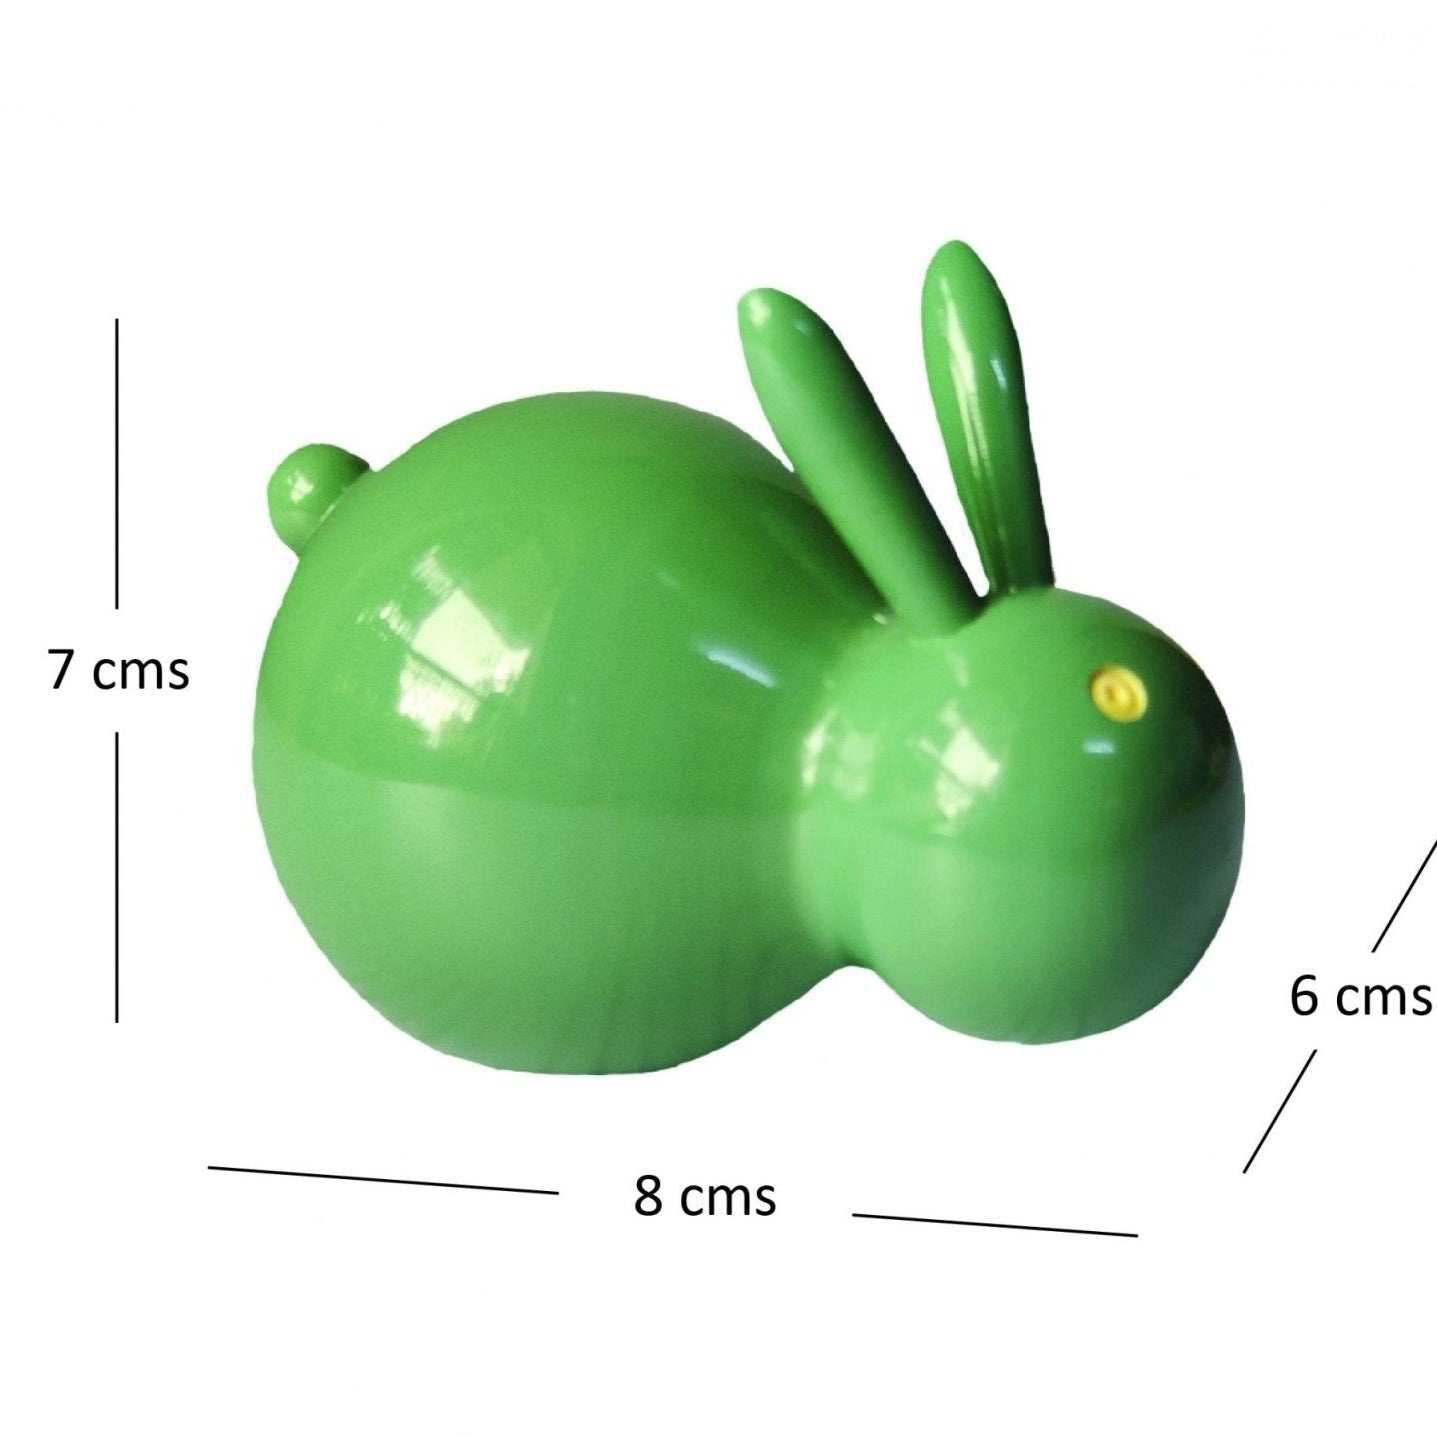 a large green balloon shaped like a rabbit